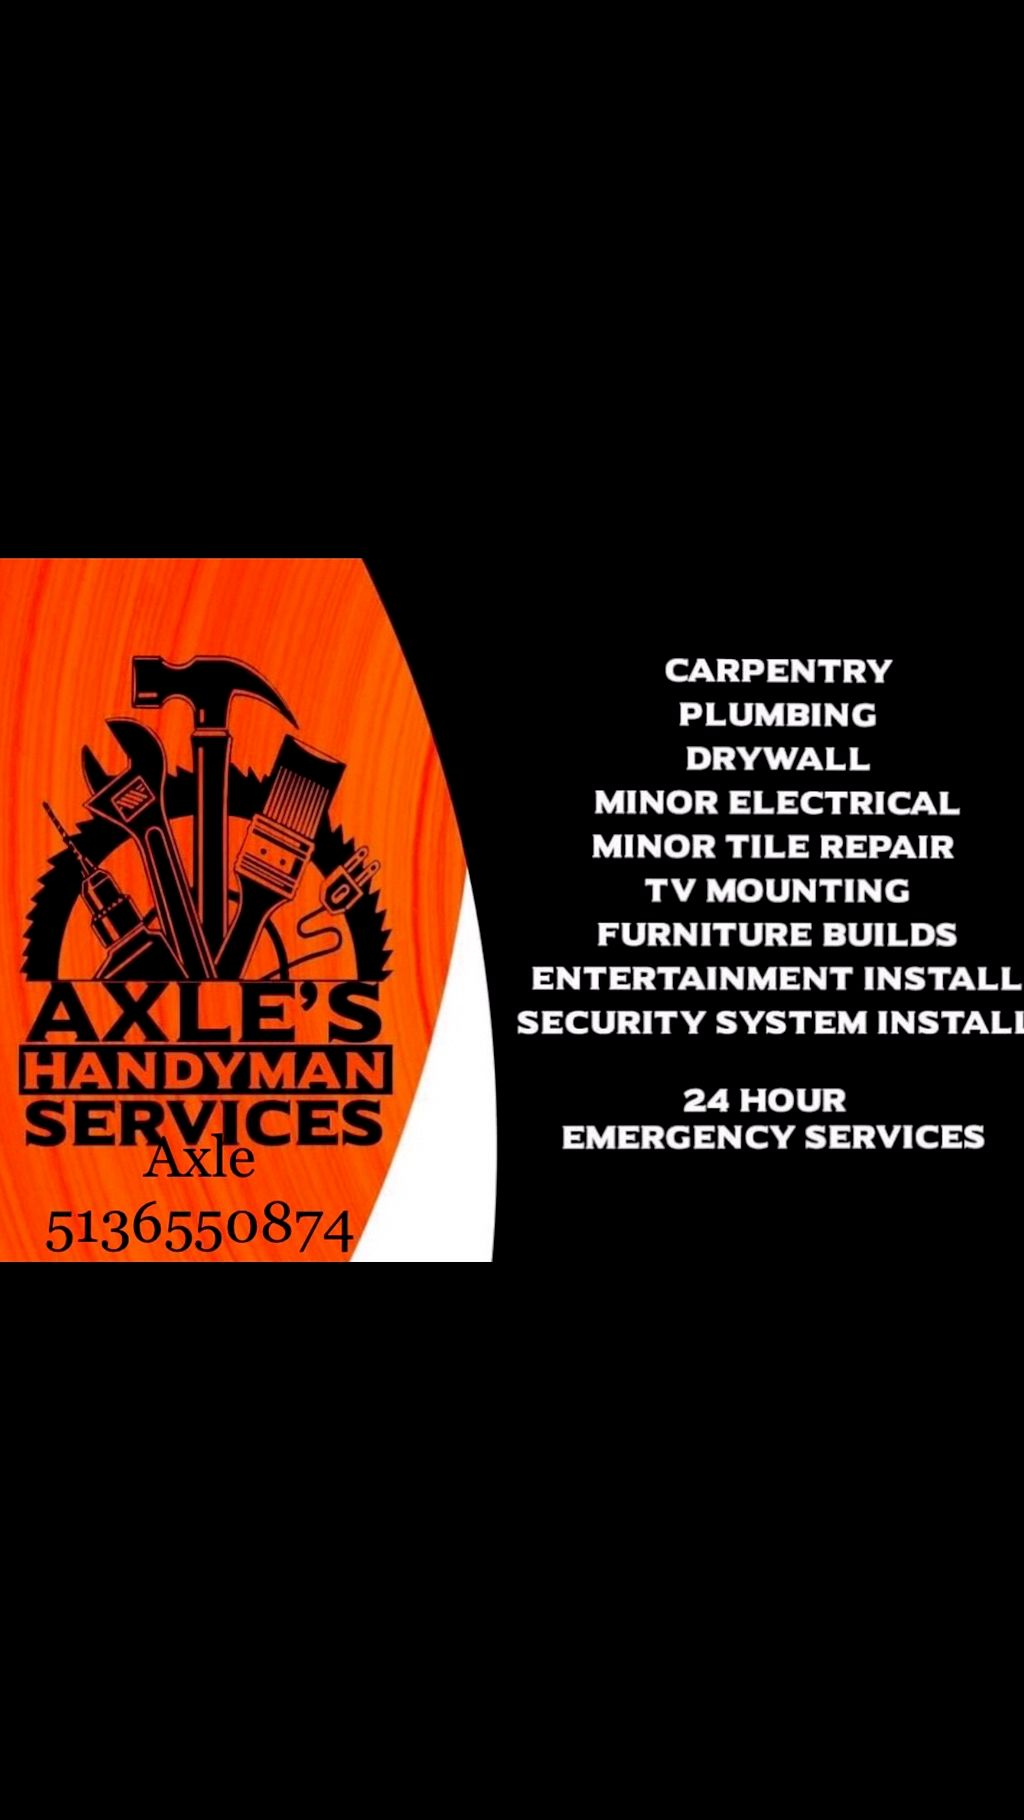 Axle’s Handyman Services